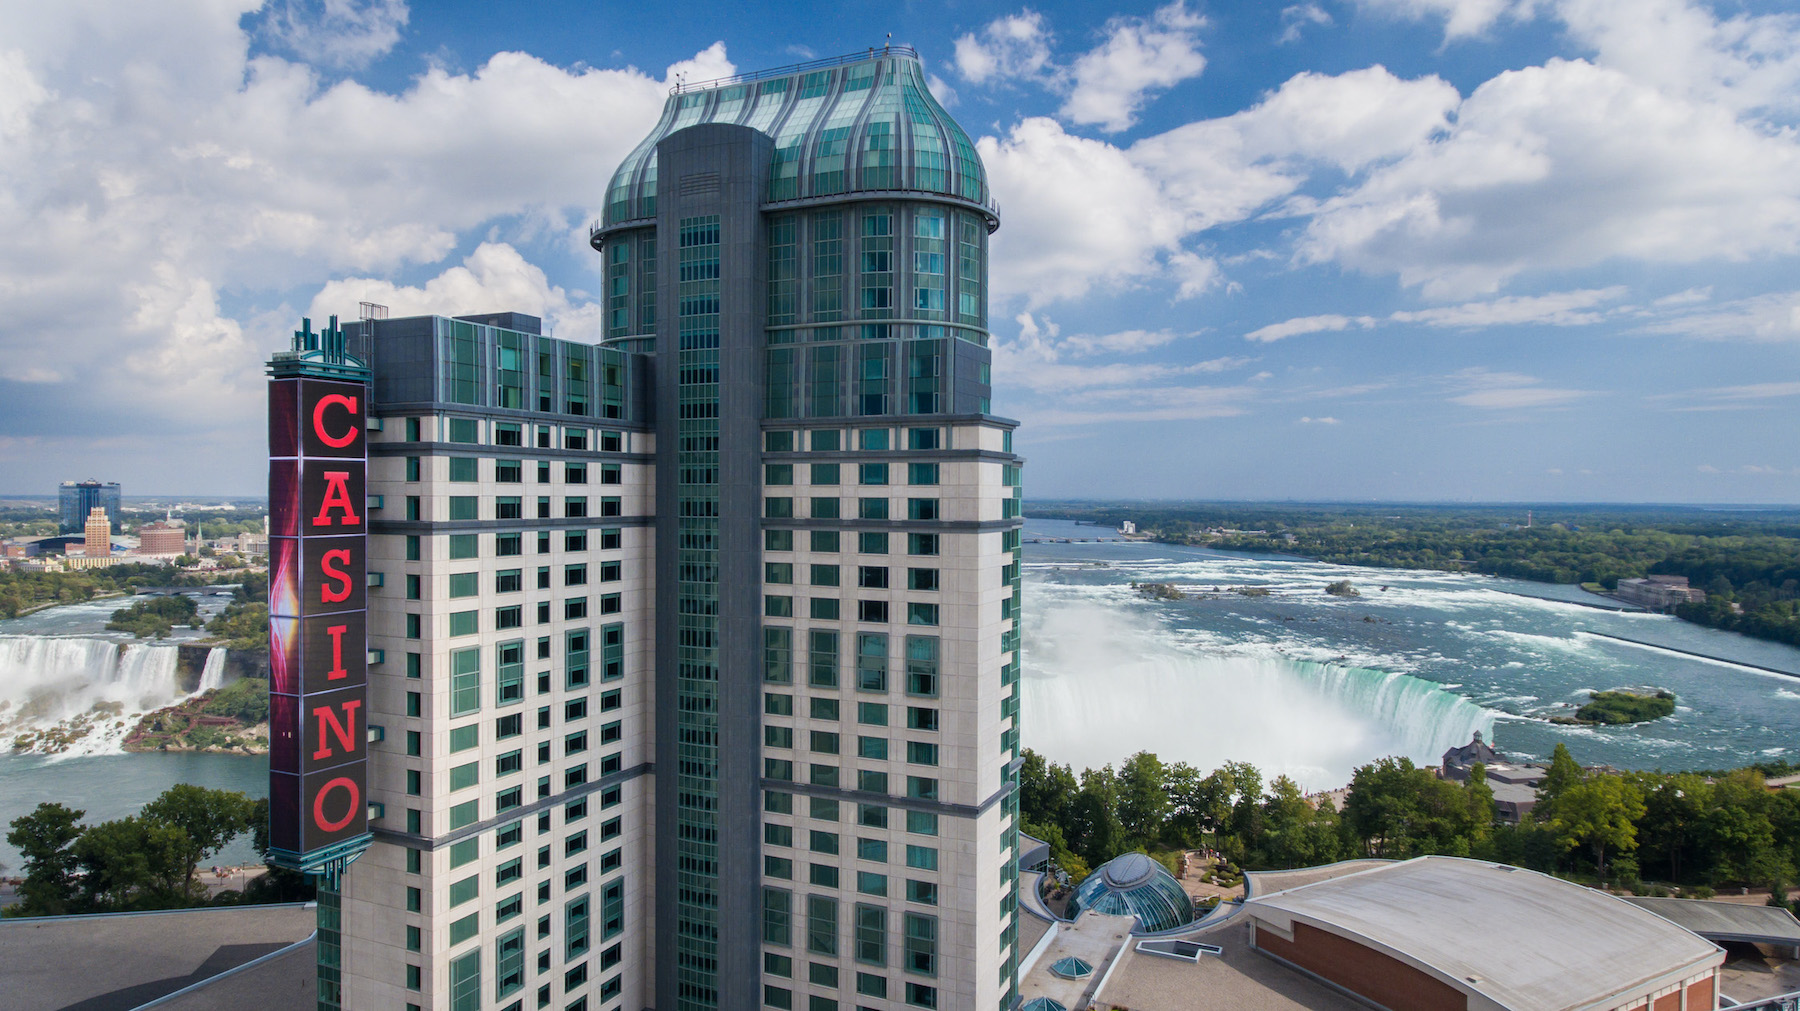 Fallsview Casino Resort and Casino Niagara media center aerial image.